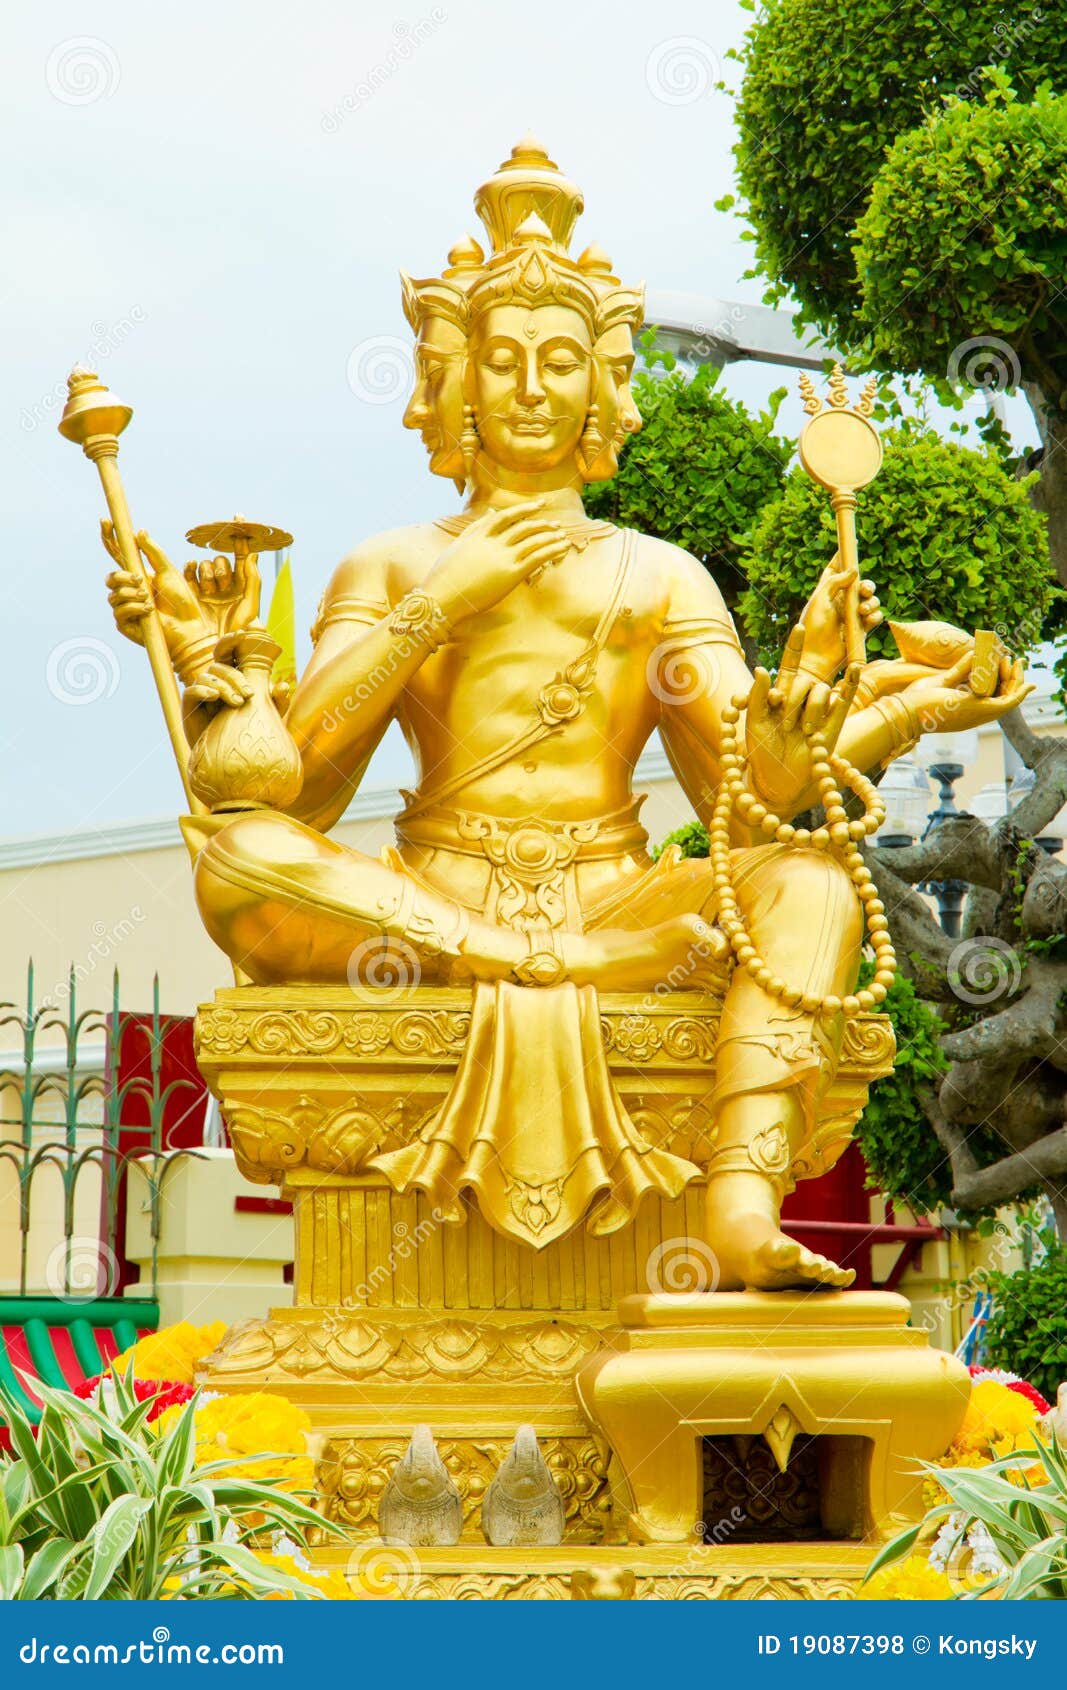 gold-statue-brahma-19087398.jpg